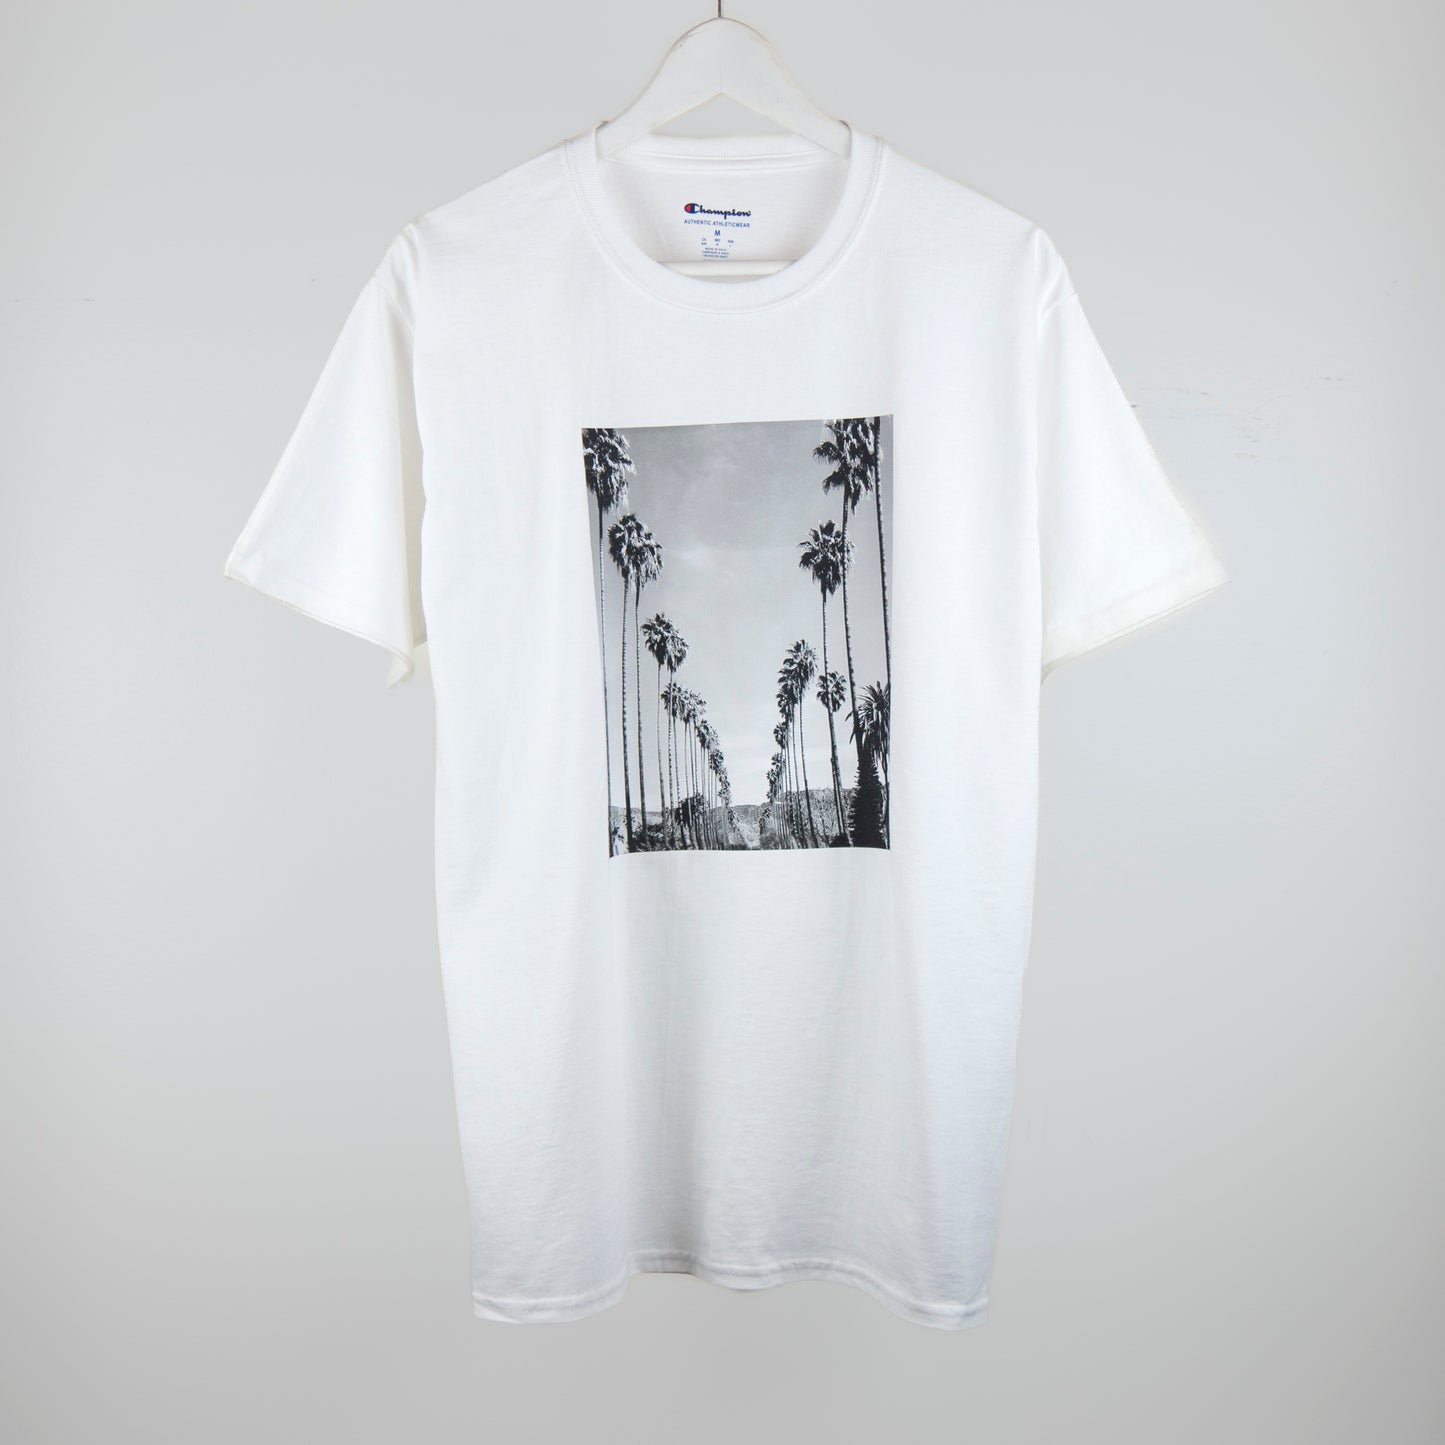 Champion - Lune Noir Original Palmtree T-shirt - White